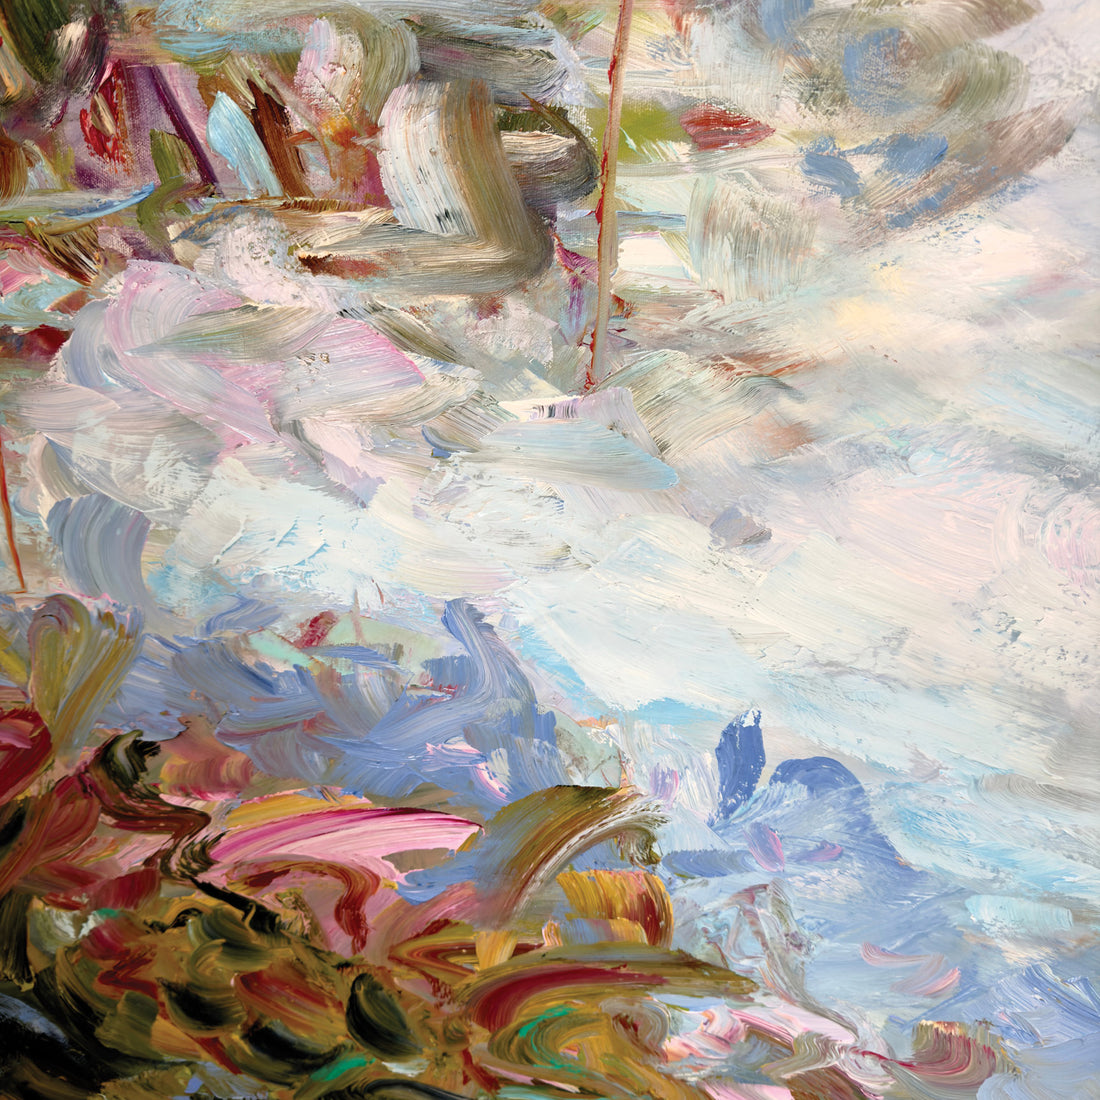 Darlene Winfield "Rhapsody" abstract landscape painting Canadian Artist Impressionism